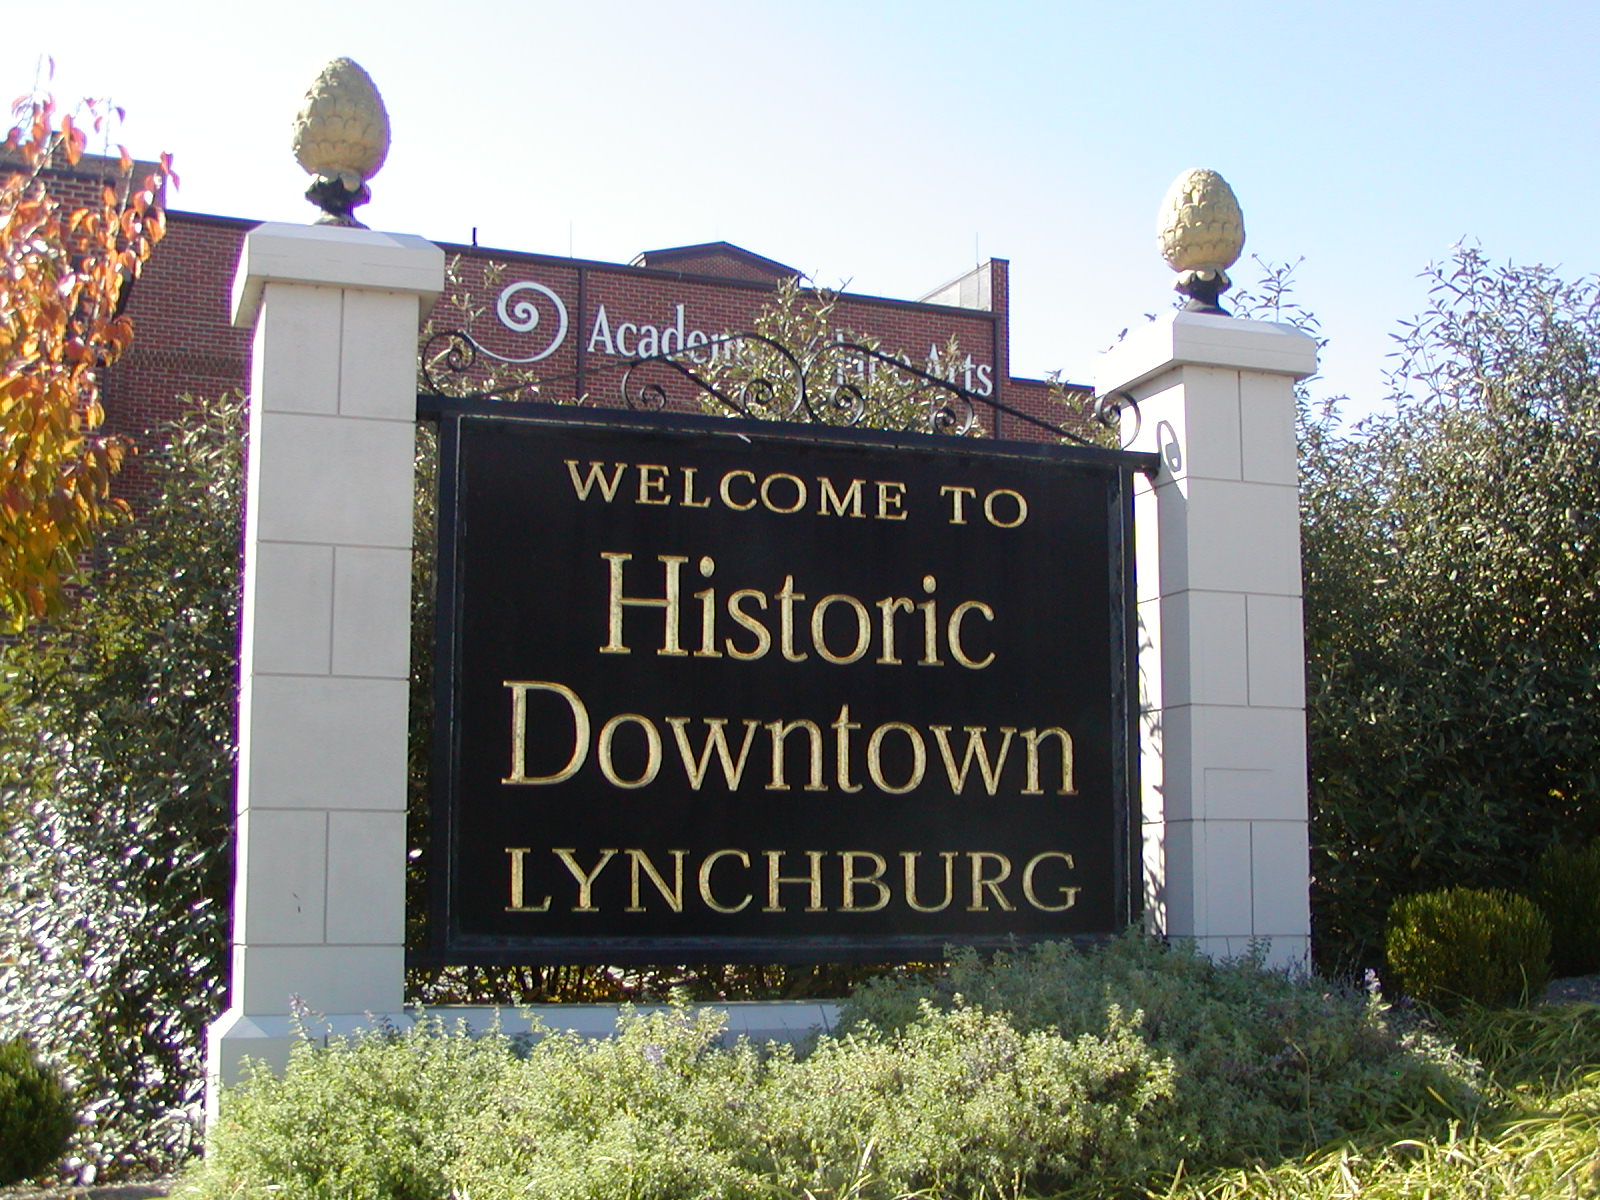 Lynchburg, Virginia